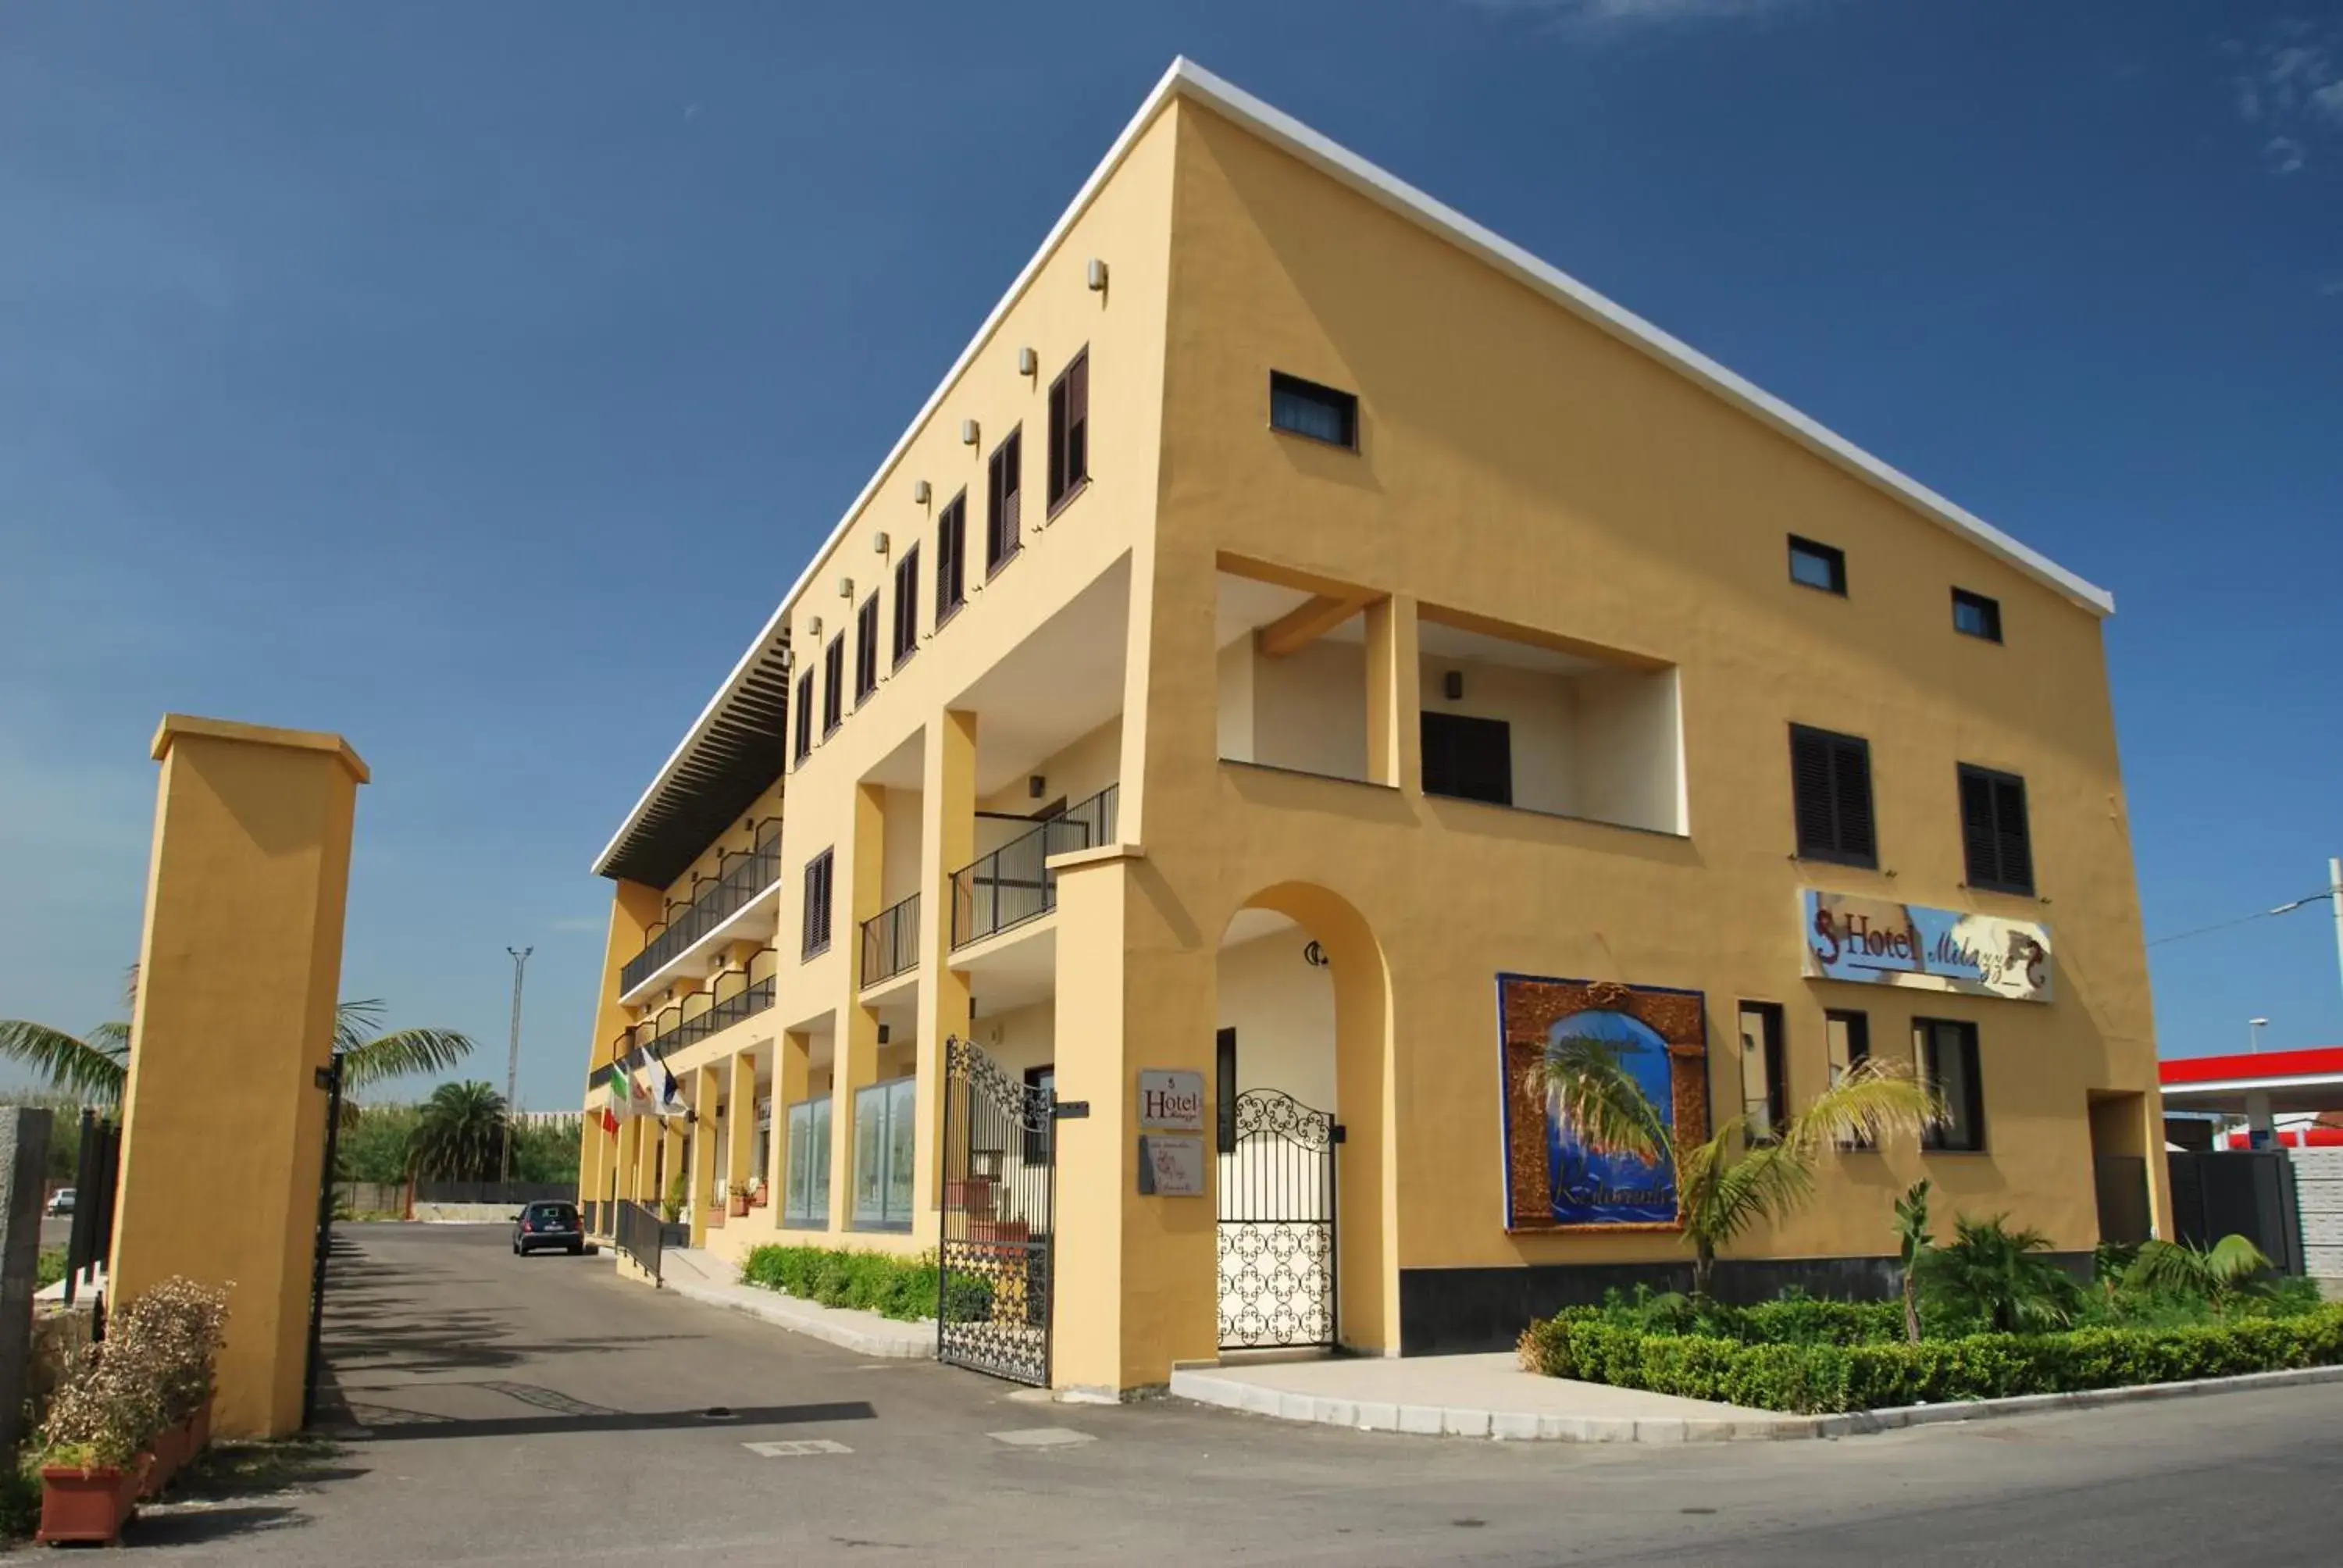 Property Building in Hotel Milazzo